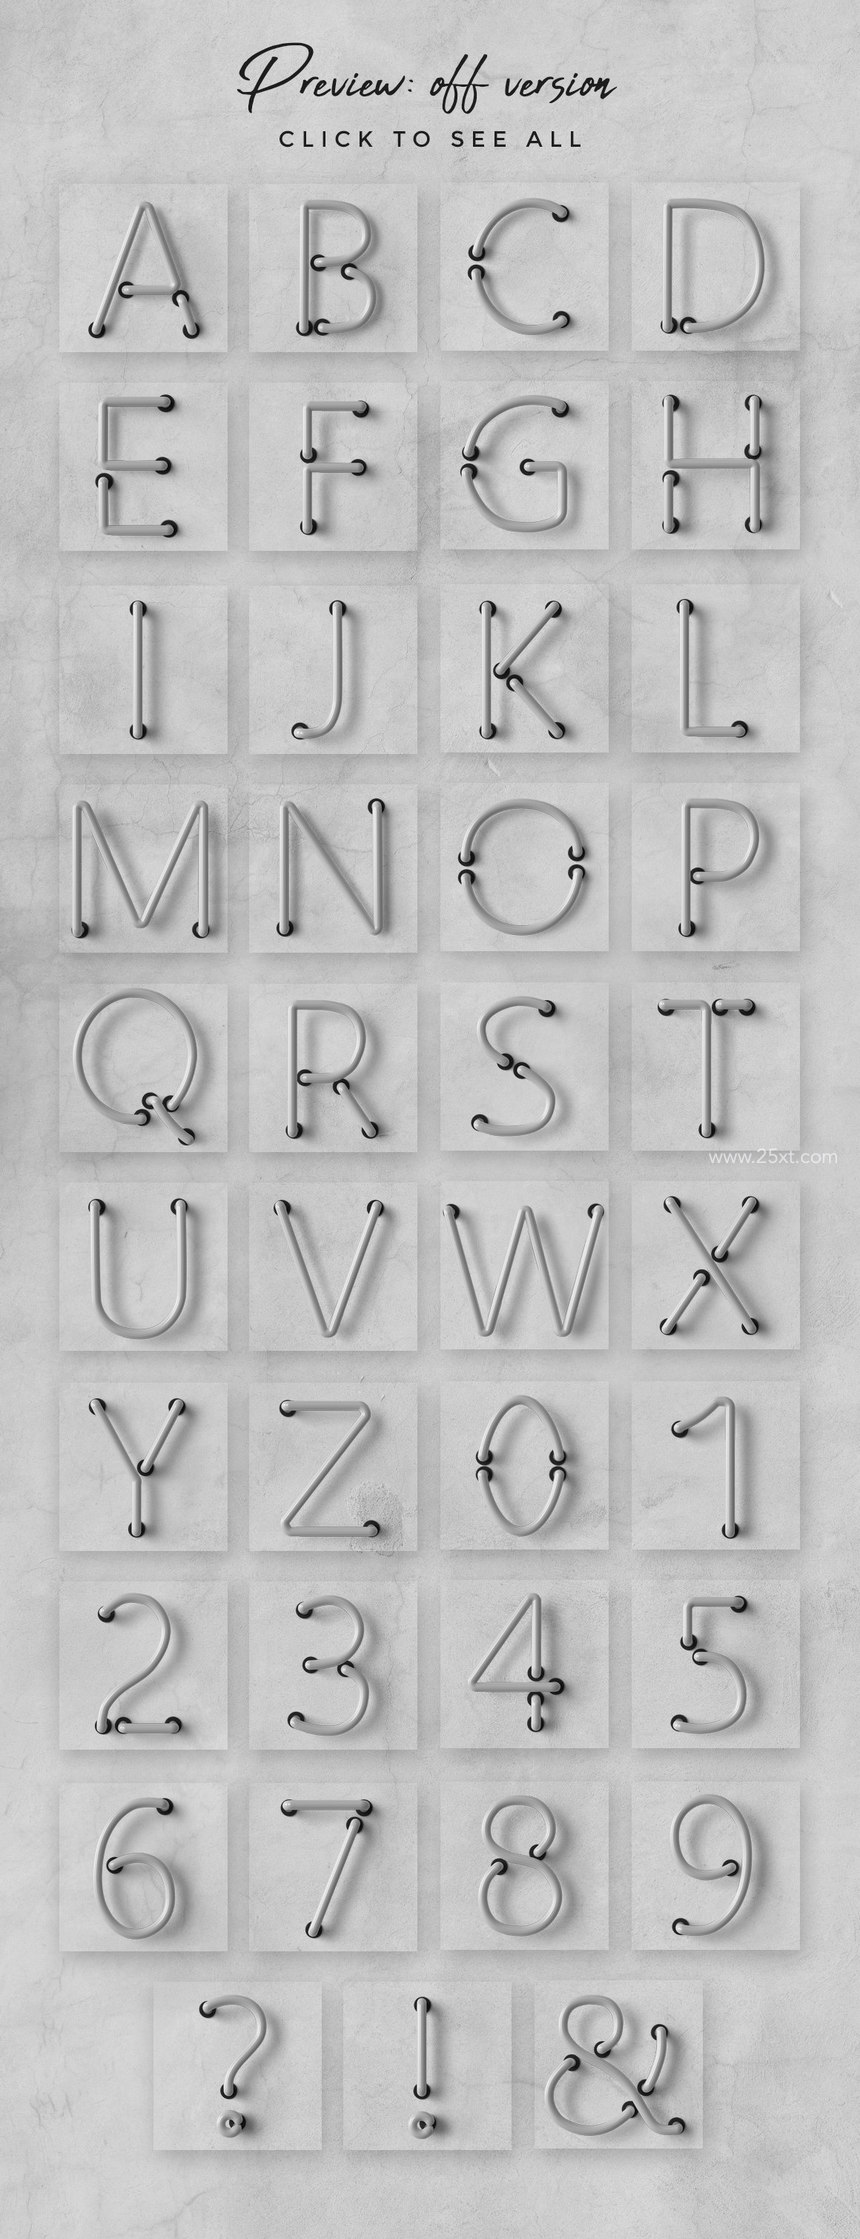 25xt-485375-Neon alphabet kit10.jpg